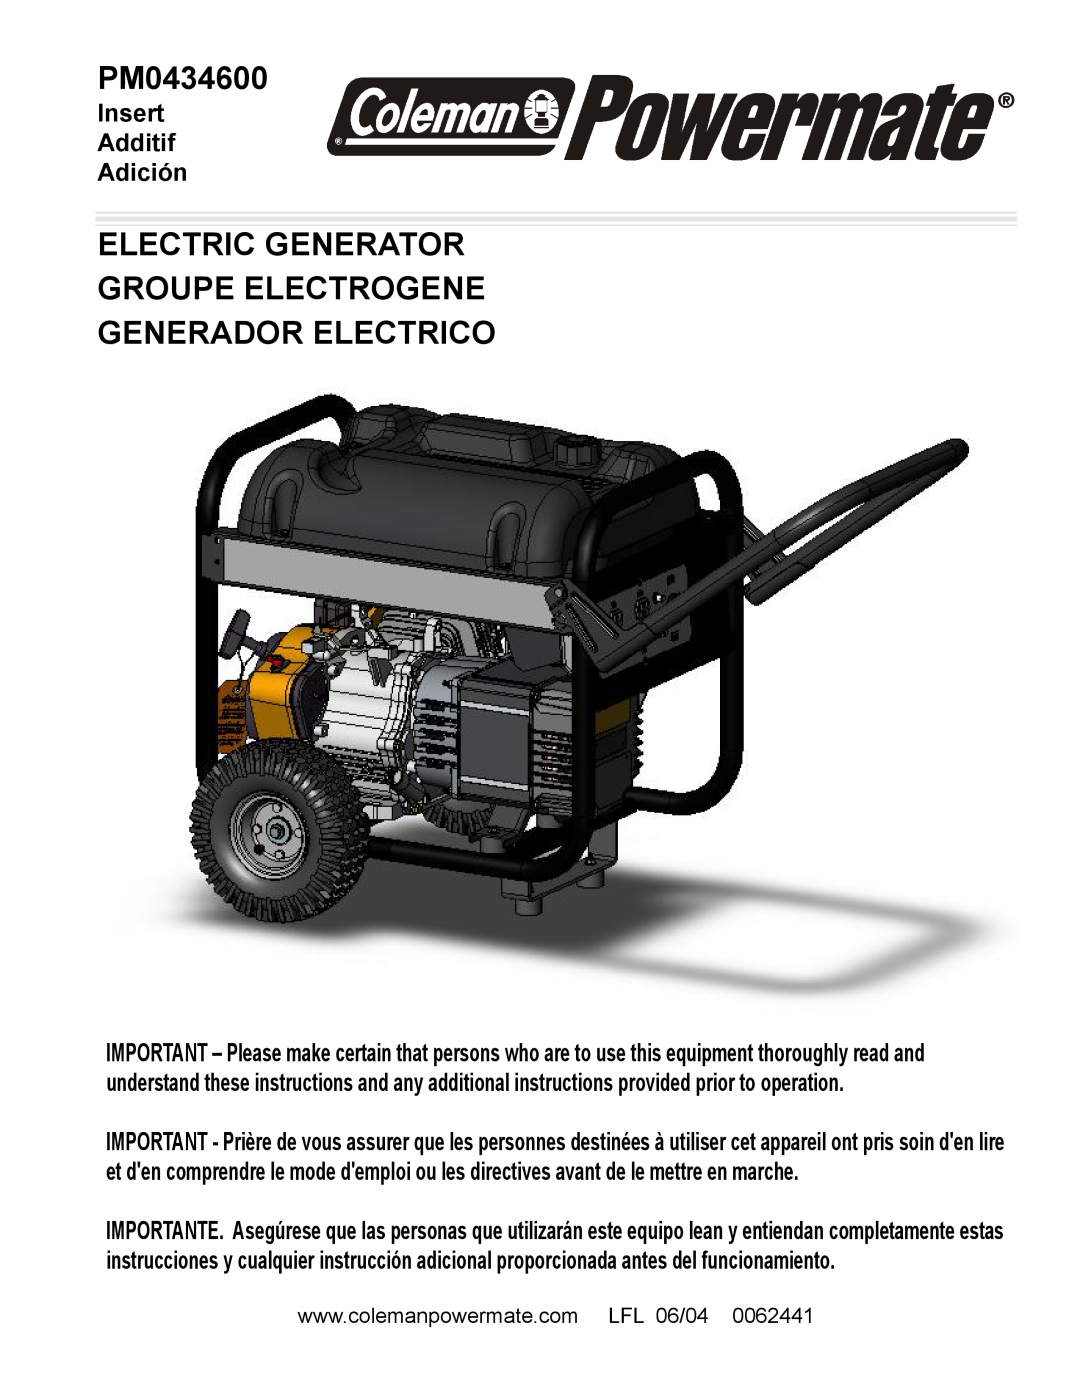 Powermate PM0434600 manual Electric Generator Groupe Electrogene, Generador Electrico, Insert Additif Adición 